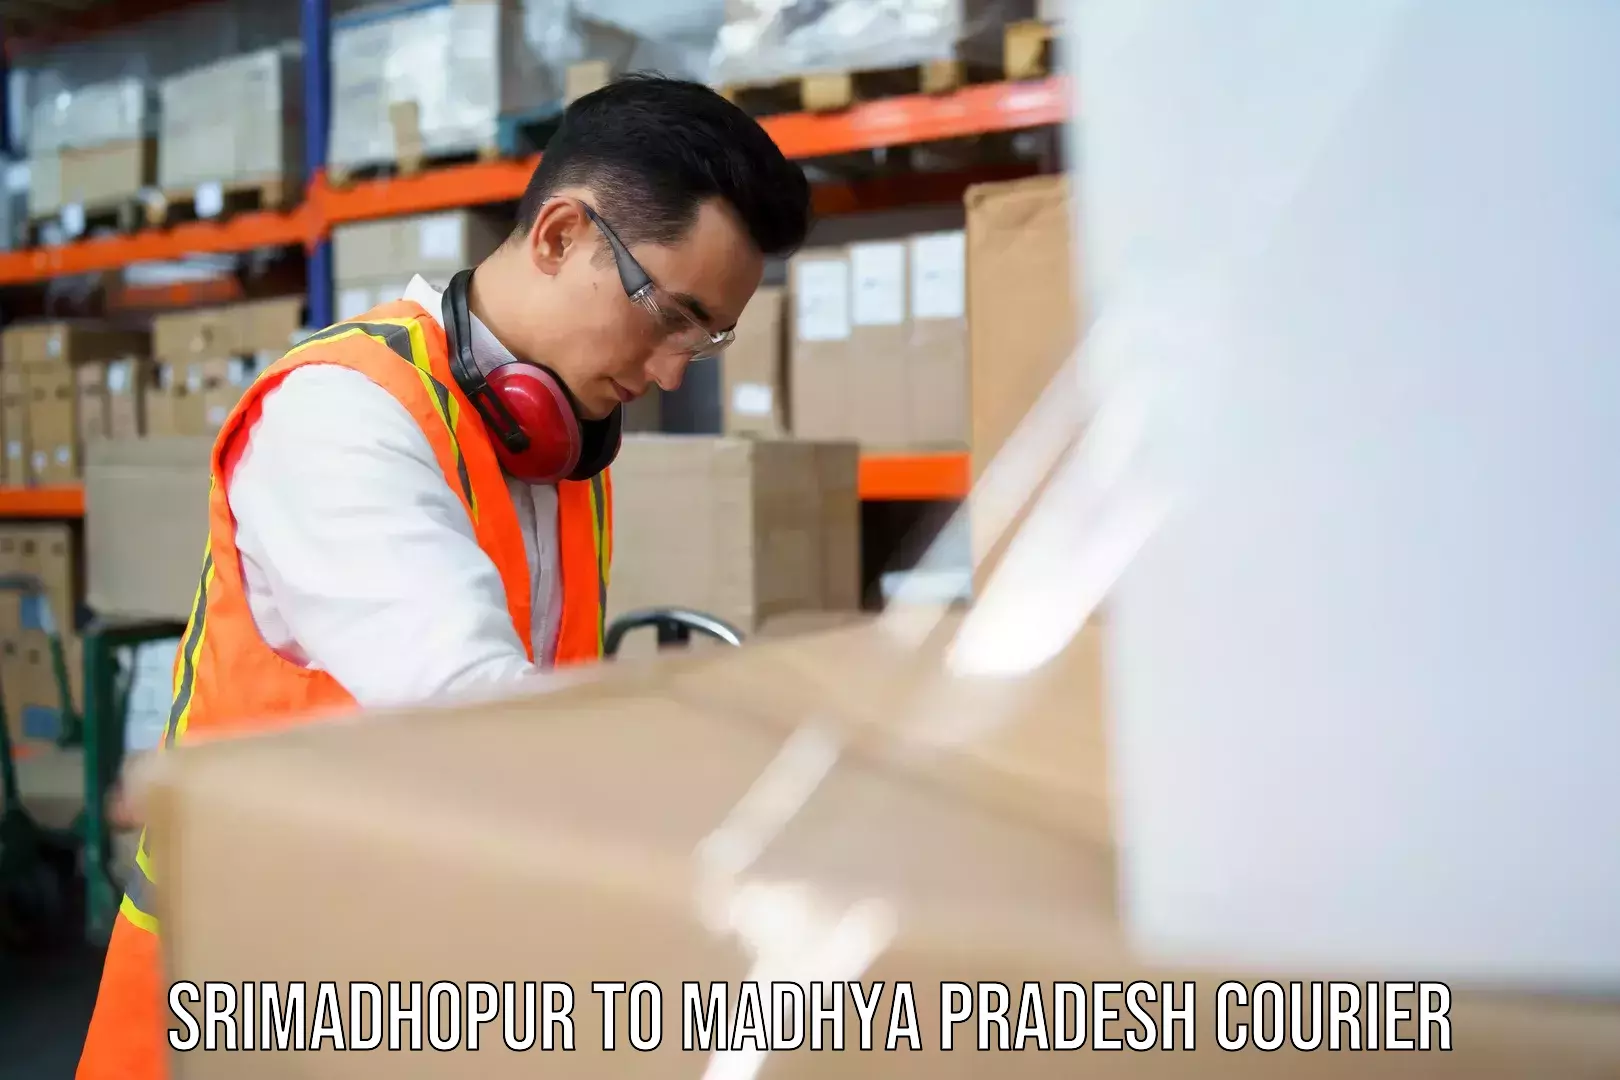 Pharmaceutical courier Srimadhopur to Maheshwar